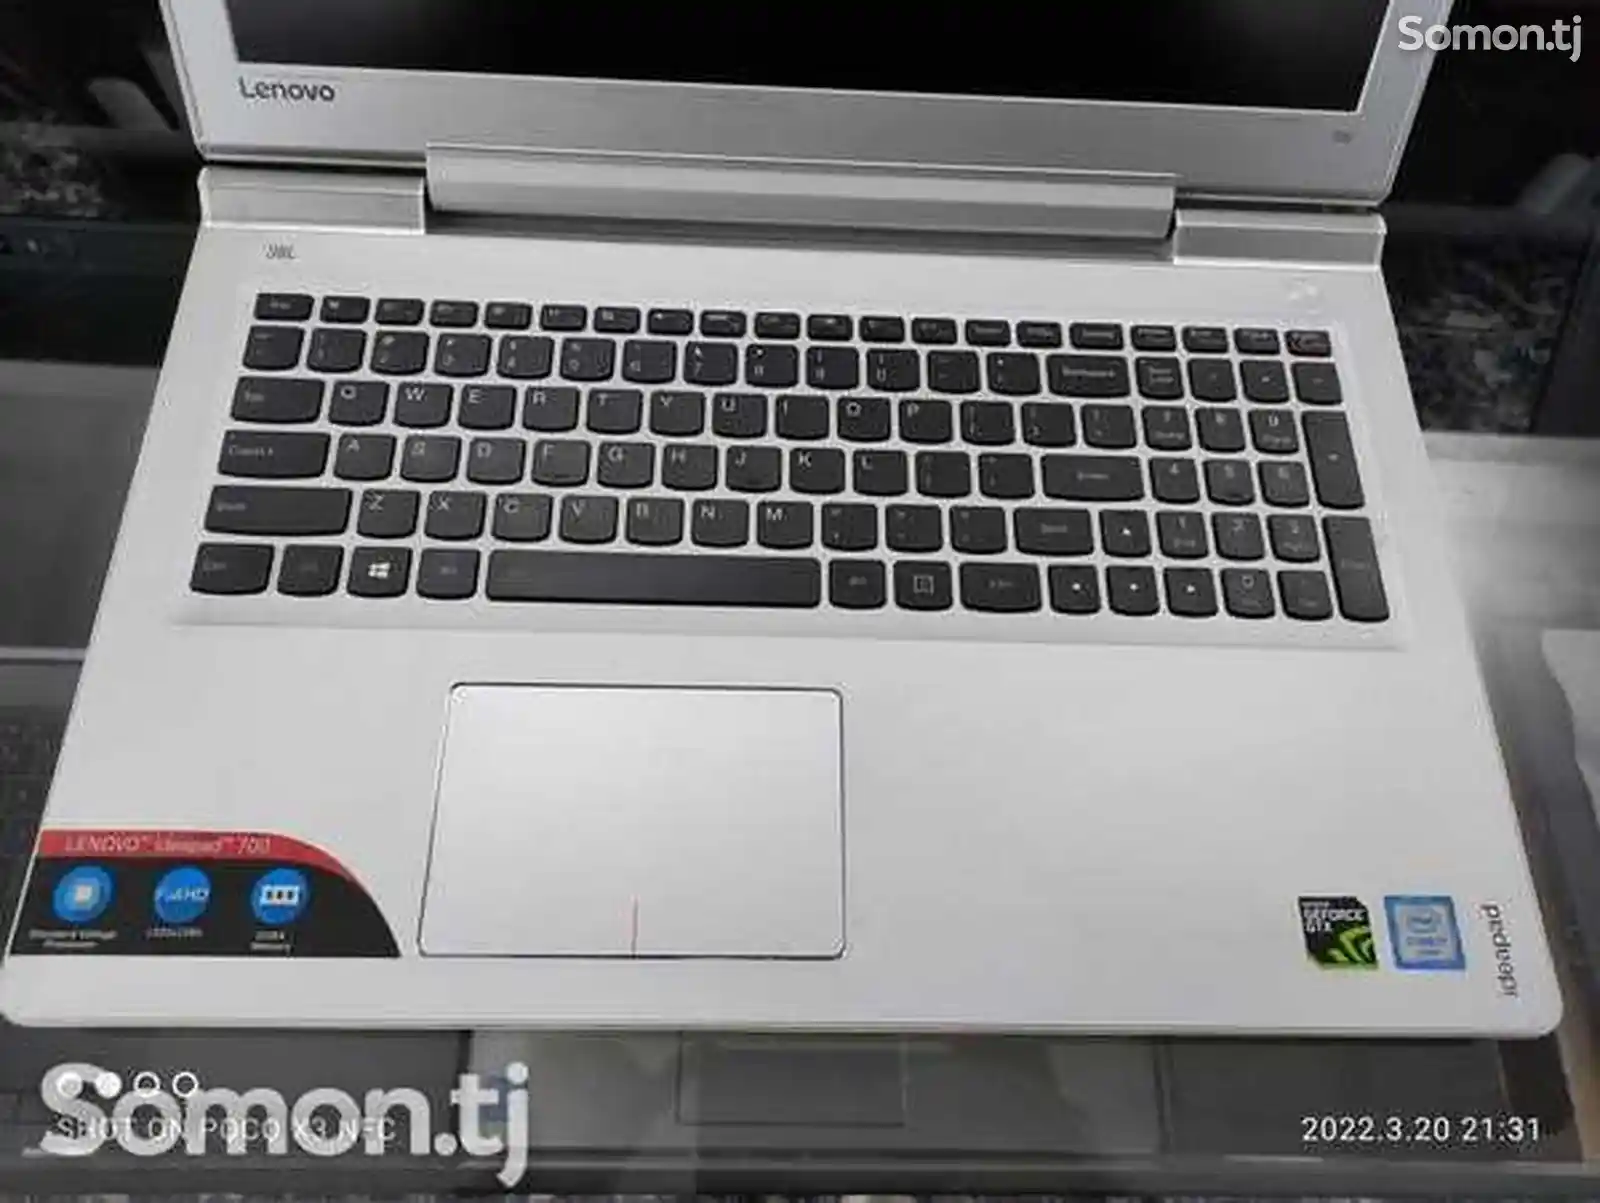 Ноутбук Lenovo Ideapad 700 Core i7-6700HQ GTX 950M 2GB-5